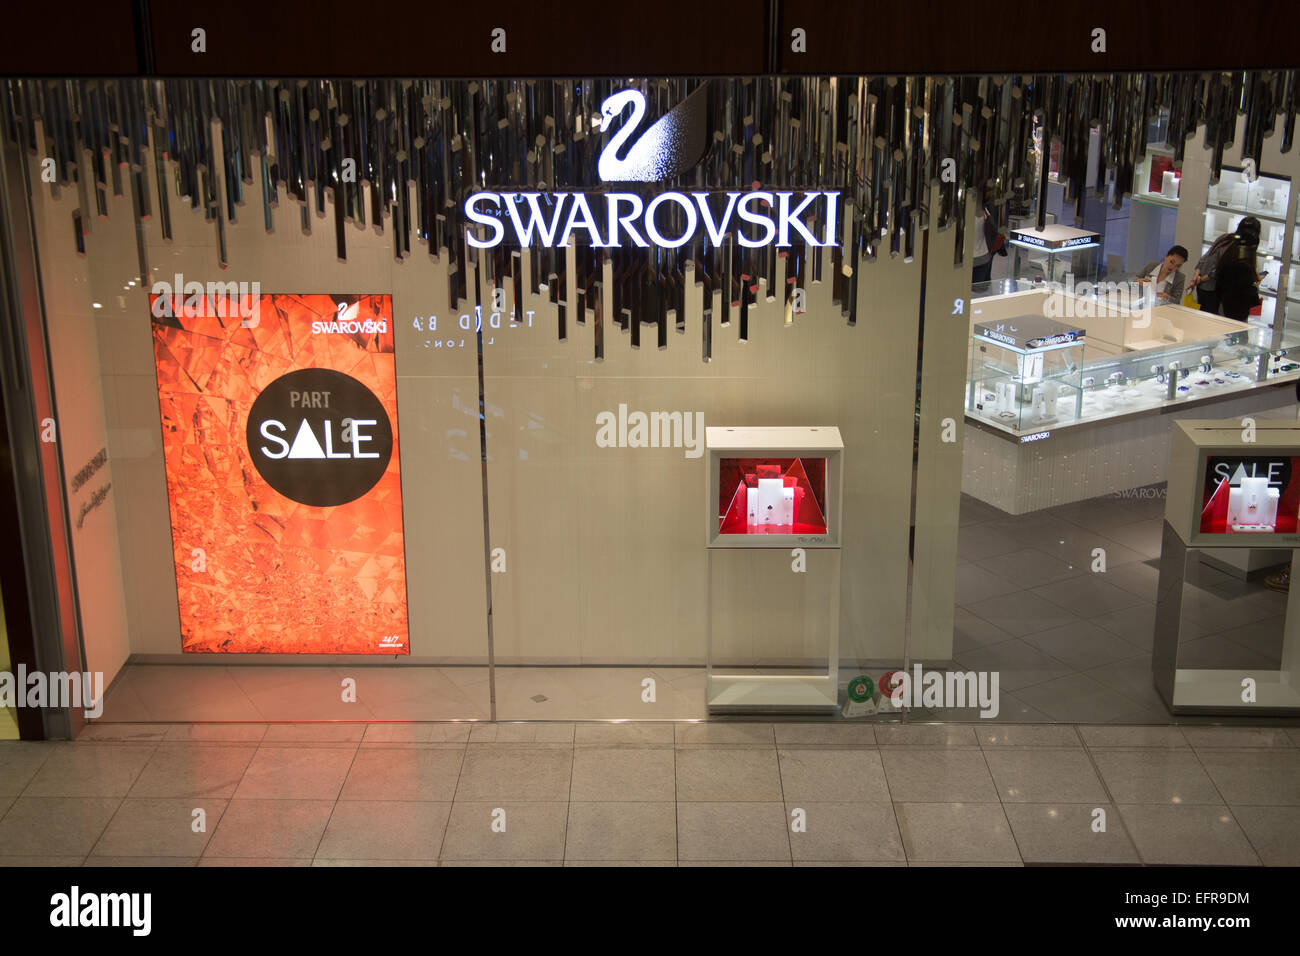 Swarovski at The Dubai Mall Stock Photo - Alamy